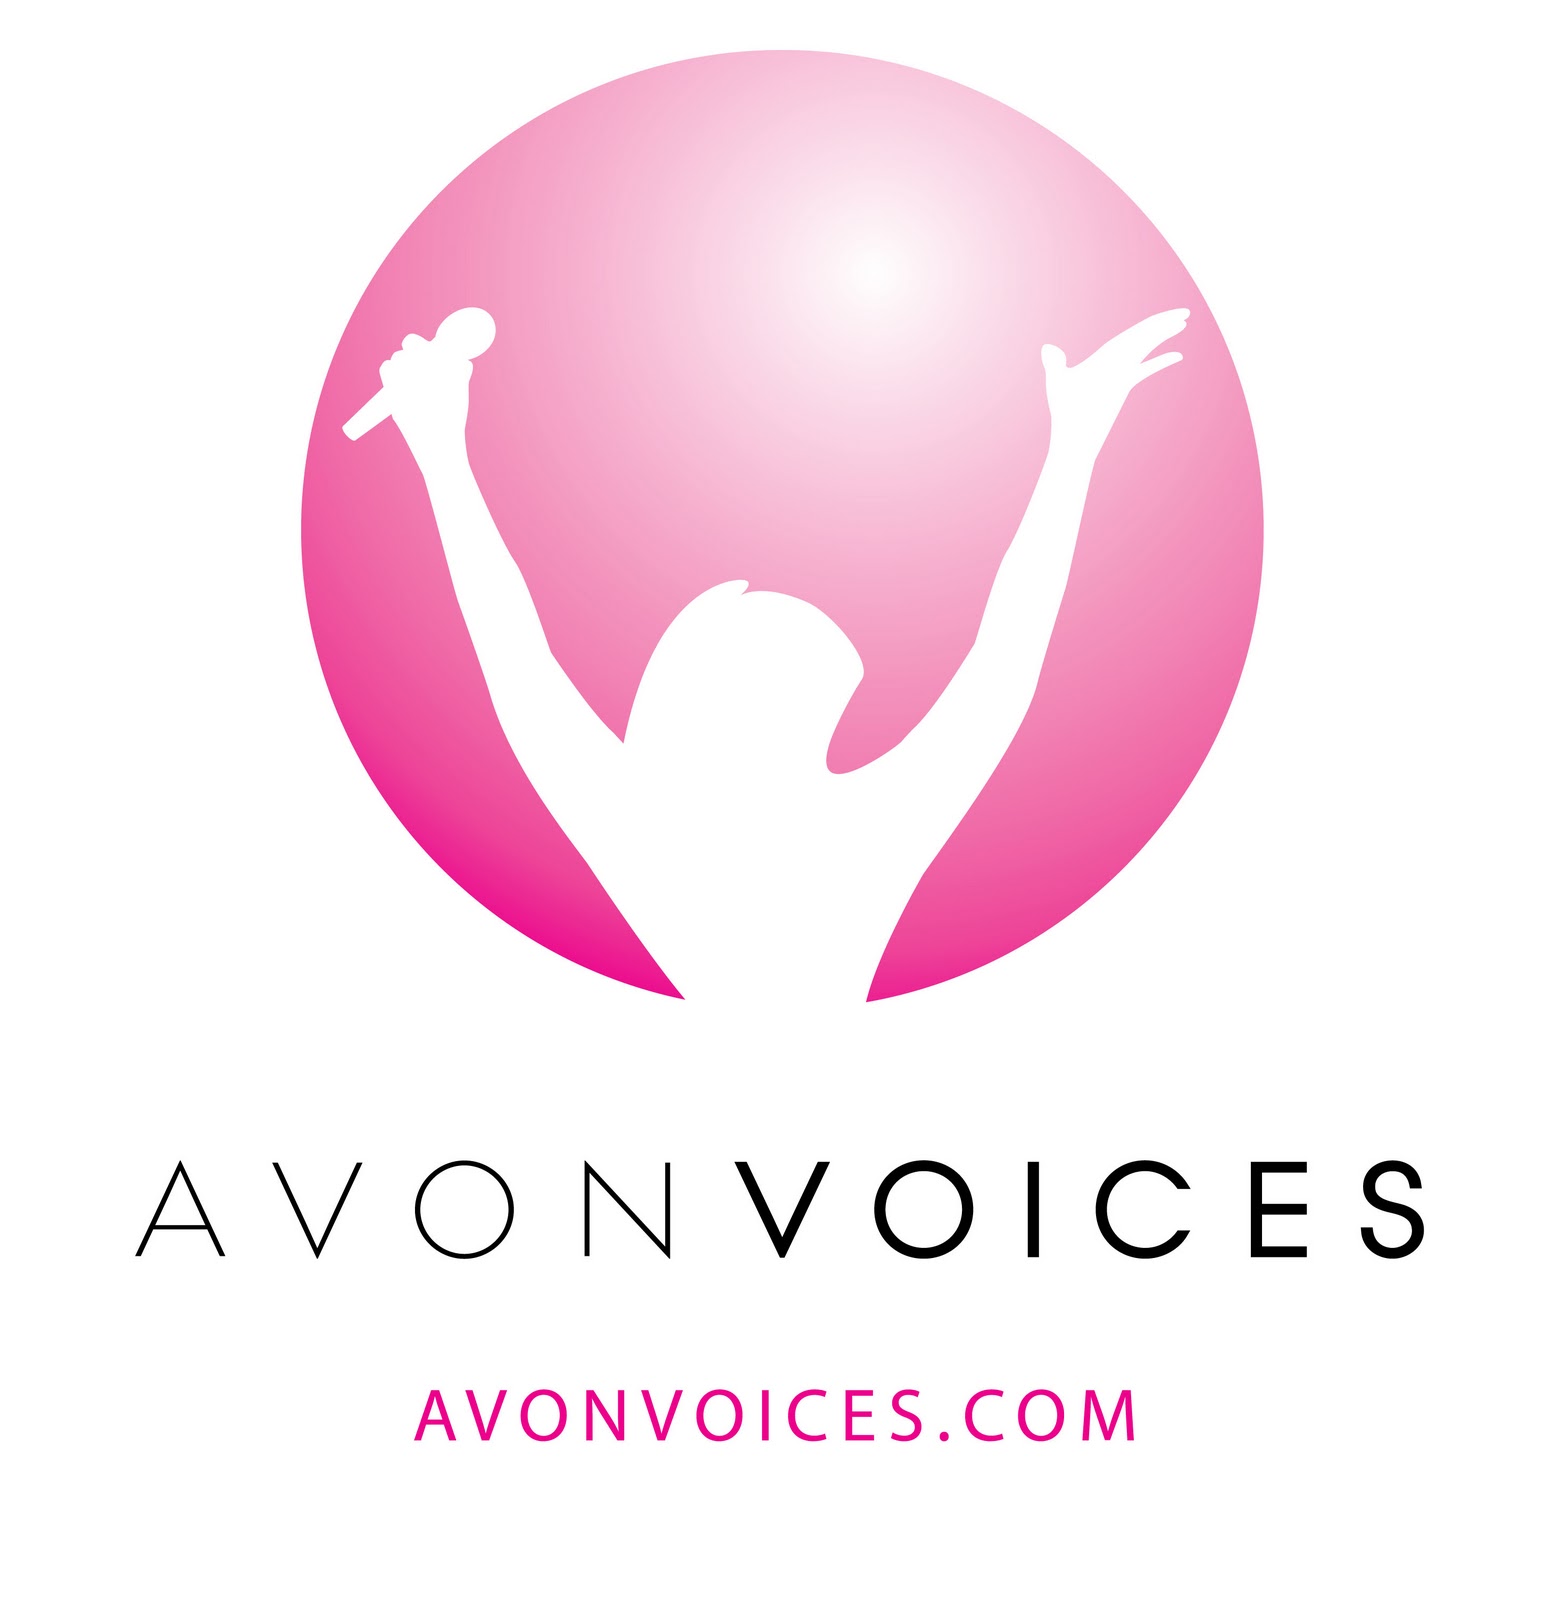 http://4.bp.blogspot.com/_V8TB-UevdBg/TPiPnYbnCwI/AAAAAAAAAIY/4r1Vgue9AlU/s1600/Avon+Voices+Logo.jpg